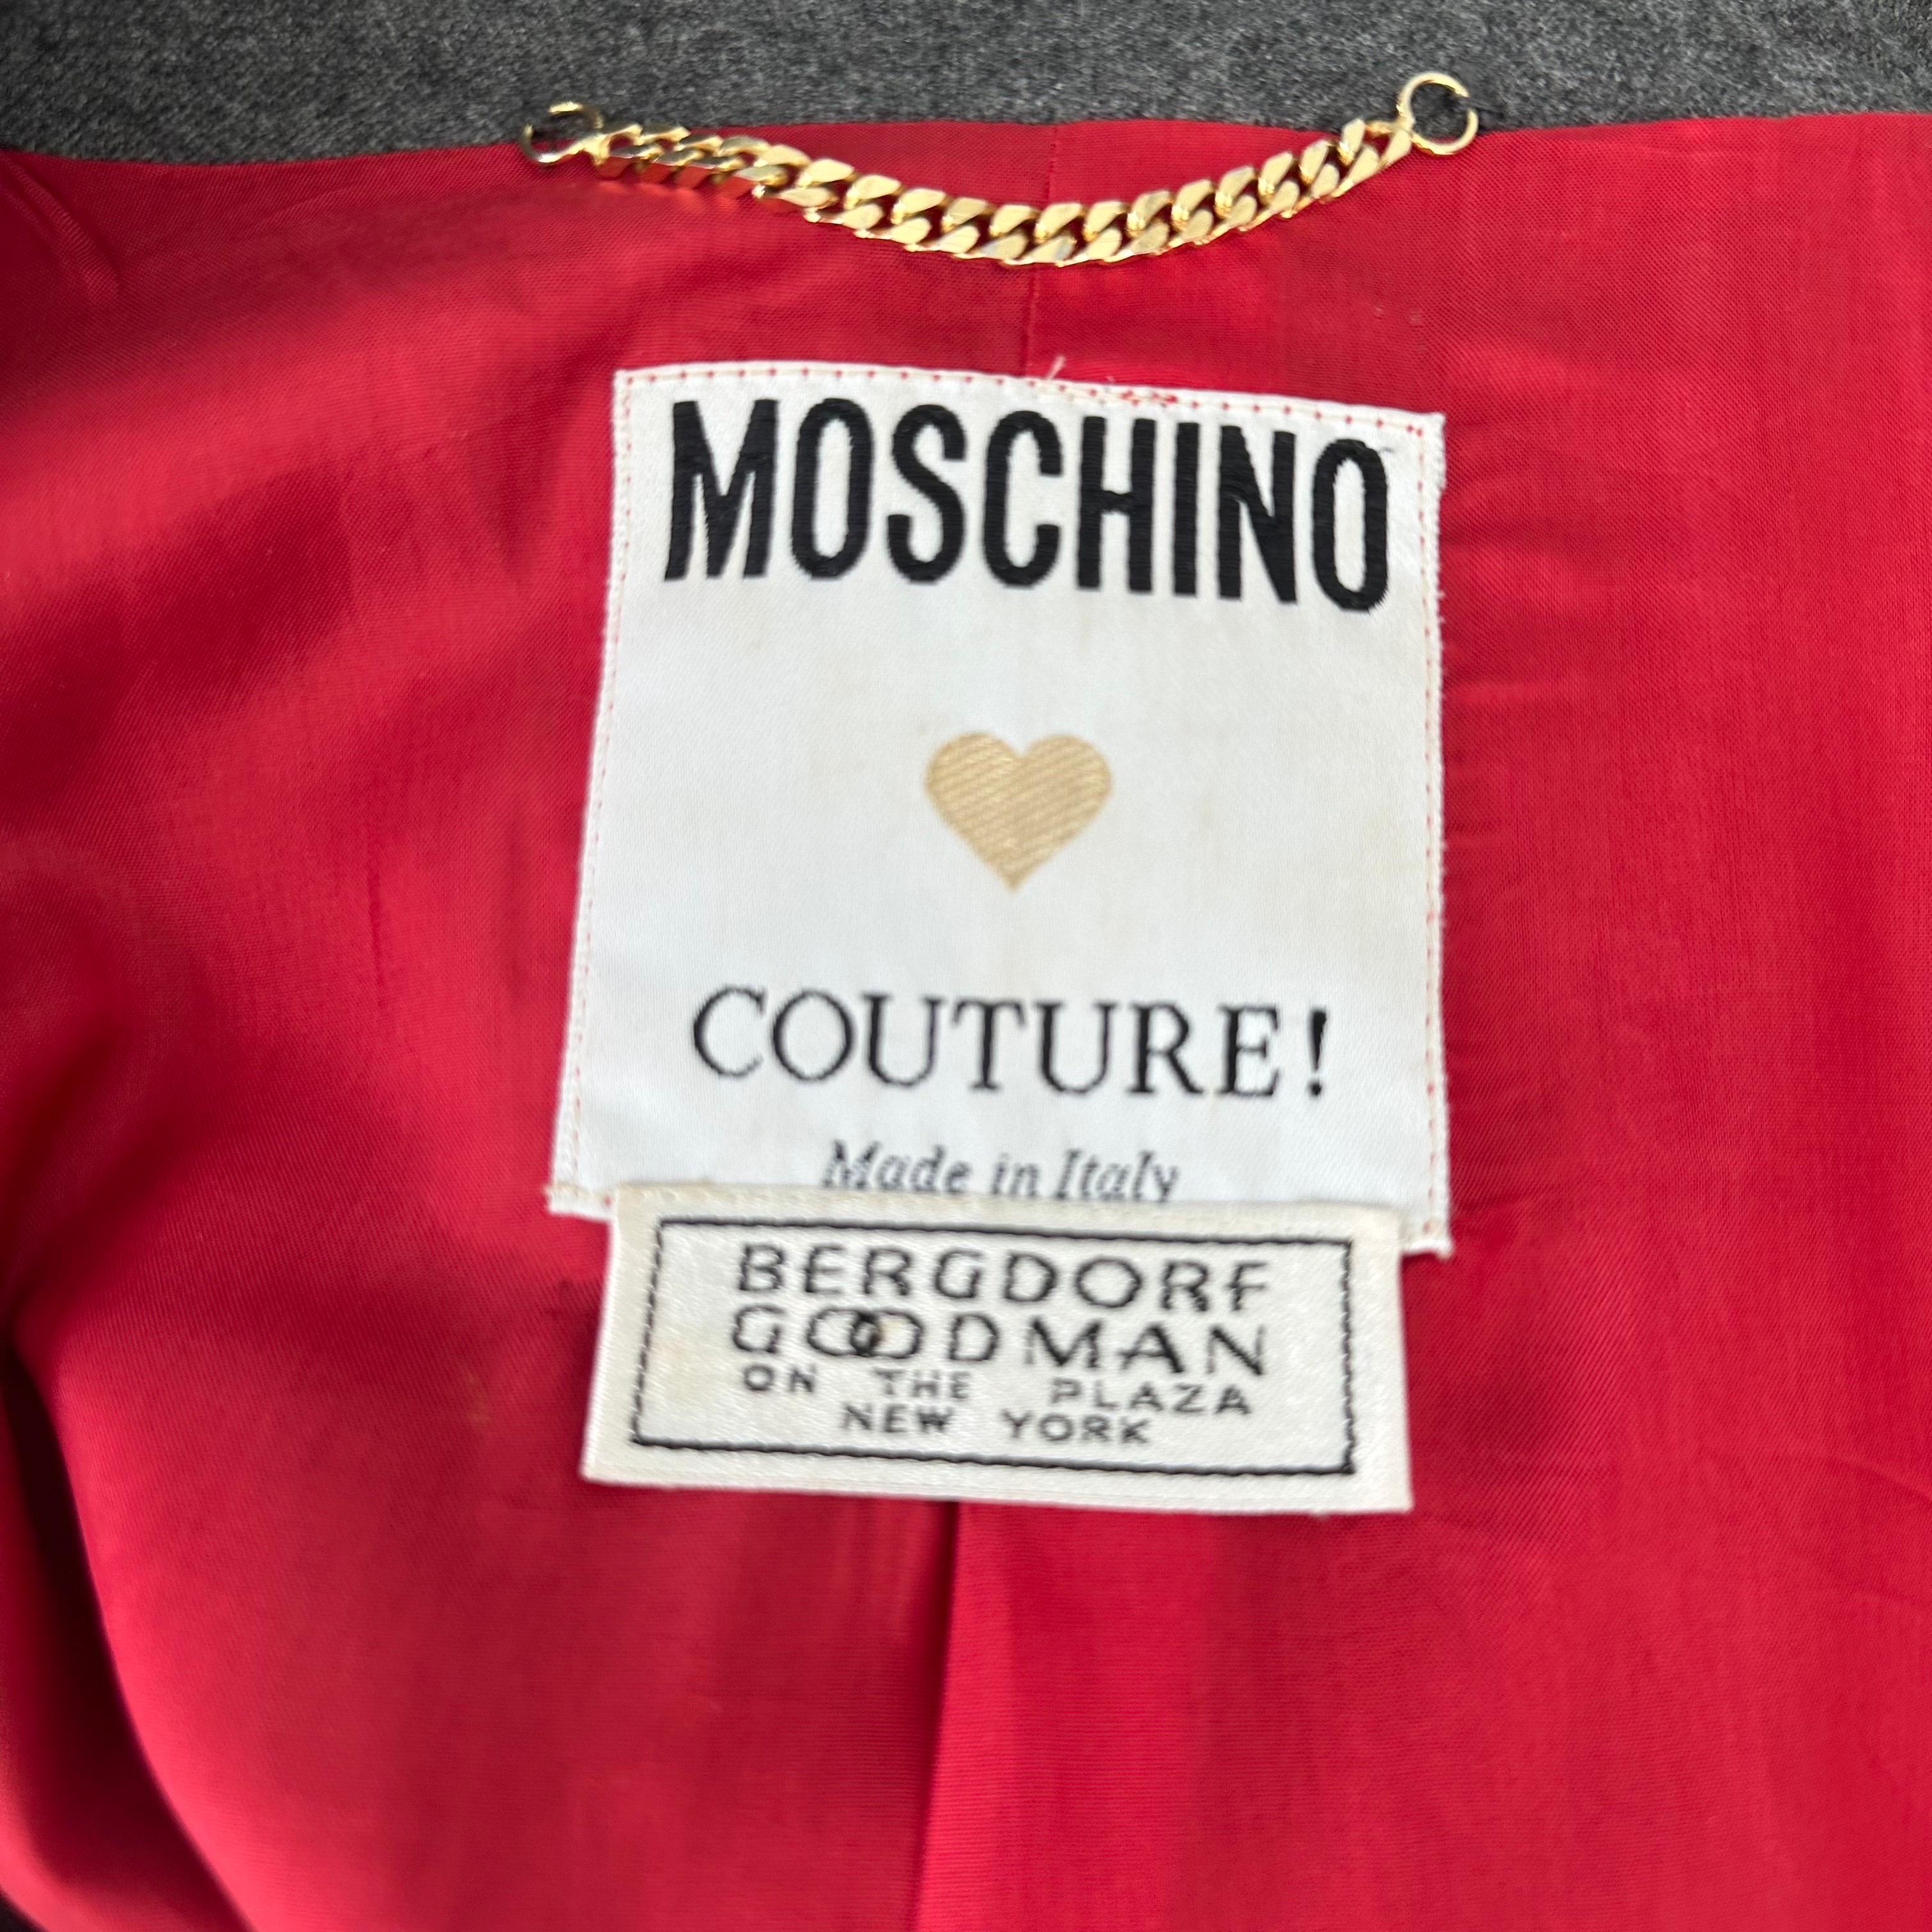 Blazer Moschino Couture Bergdorf Goodman 6